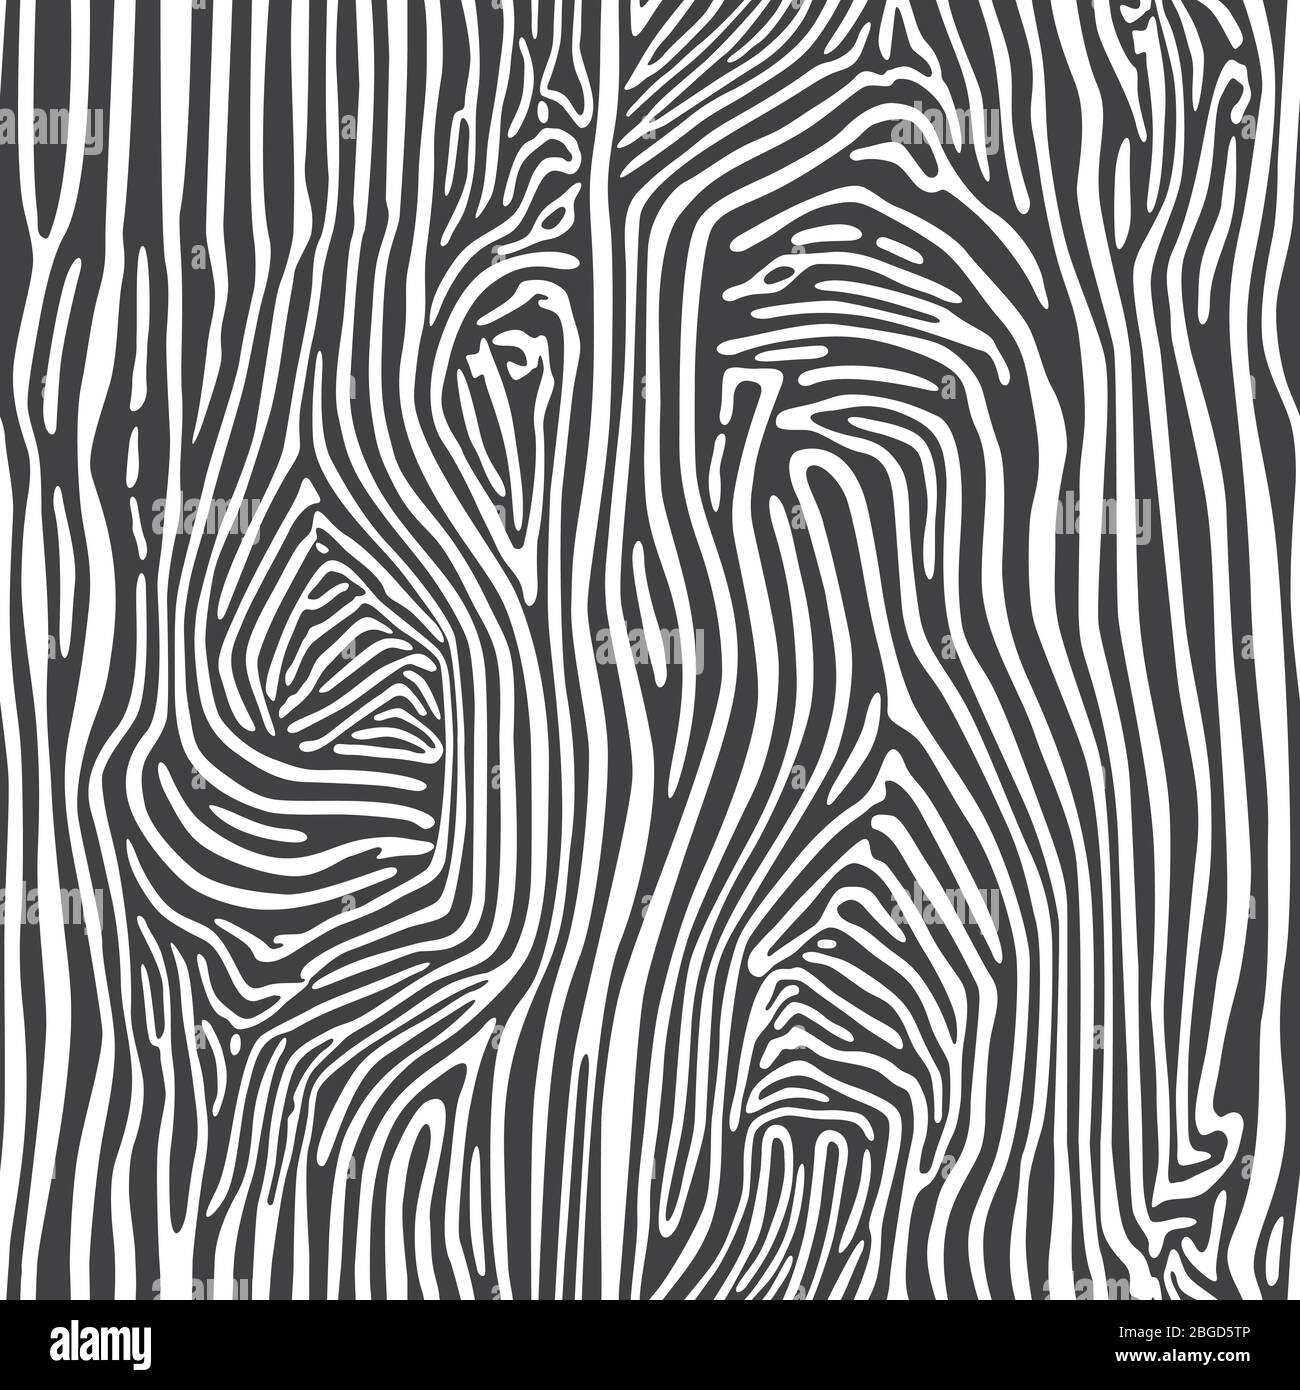 Zebra skin seamless african animal pattern vector illustration. Black and white print. Striped pelage. Stock Vector